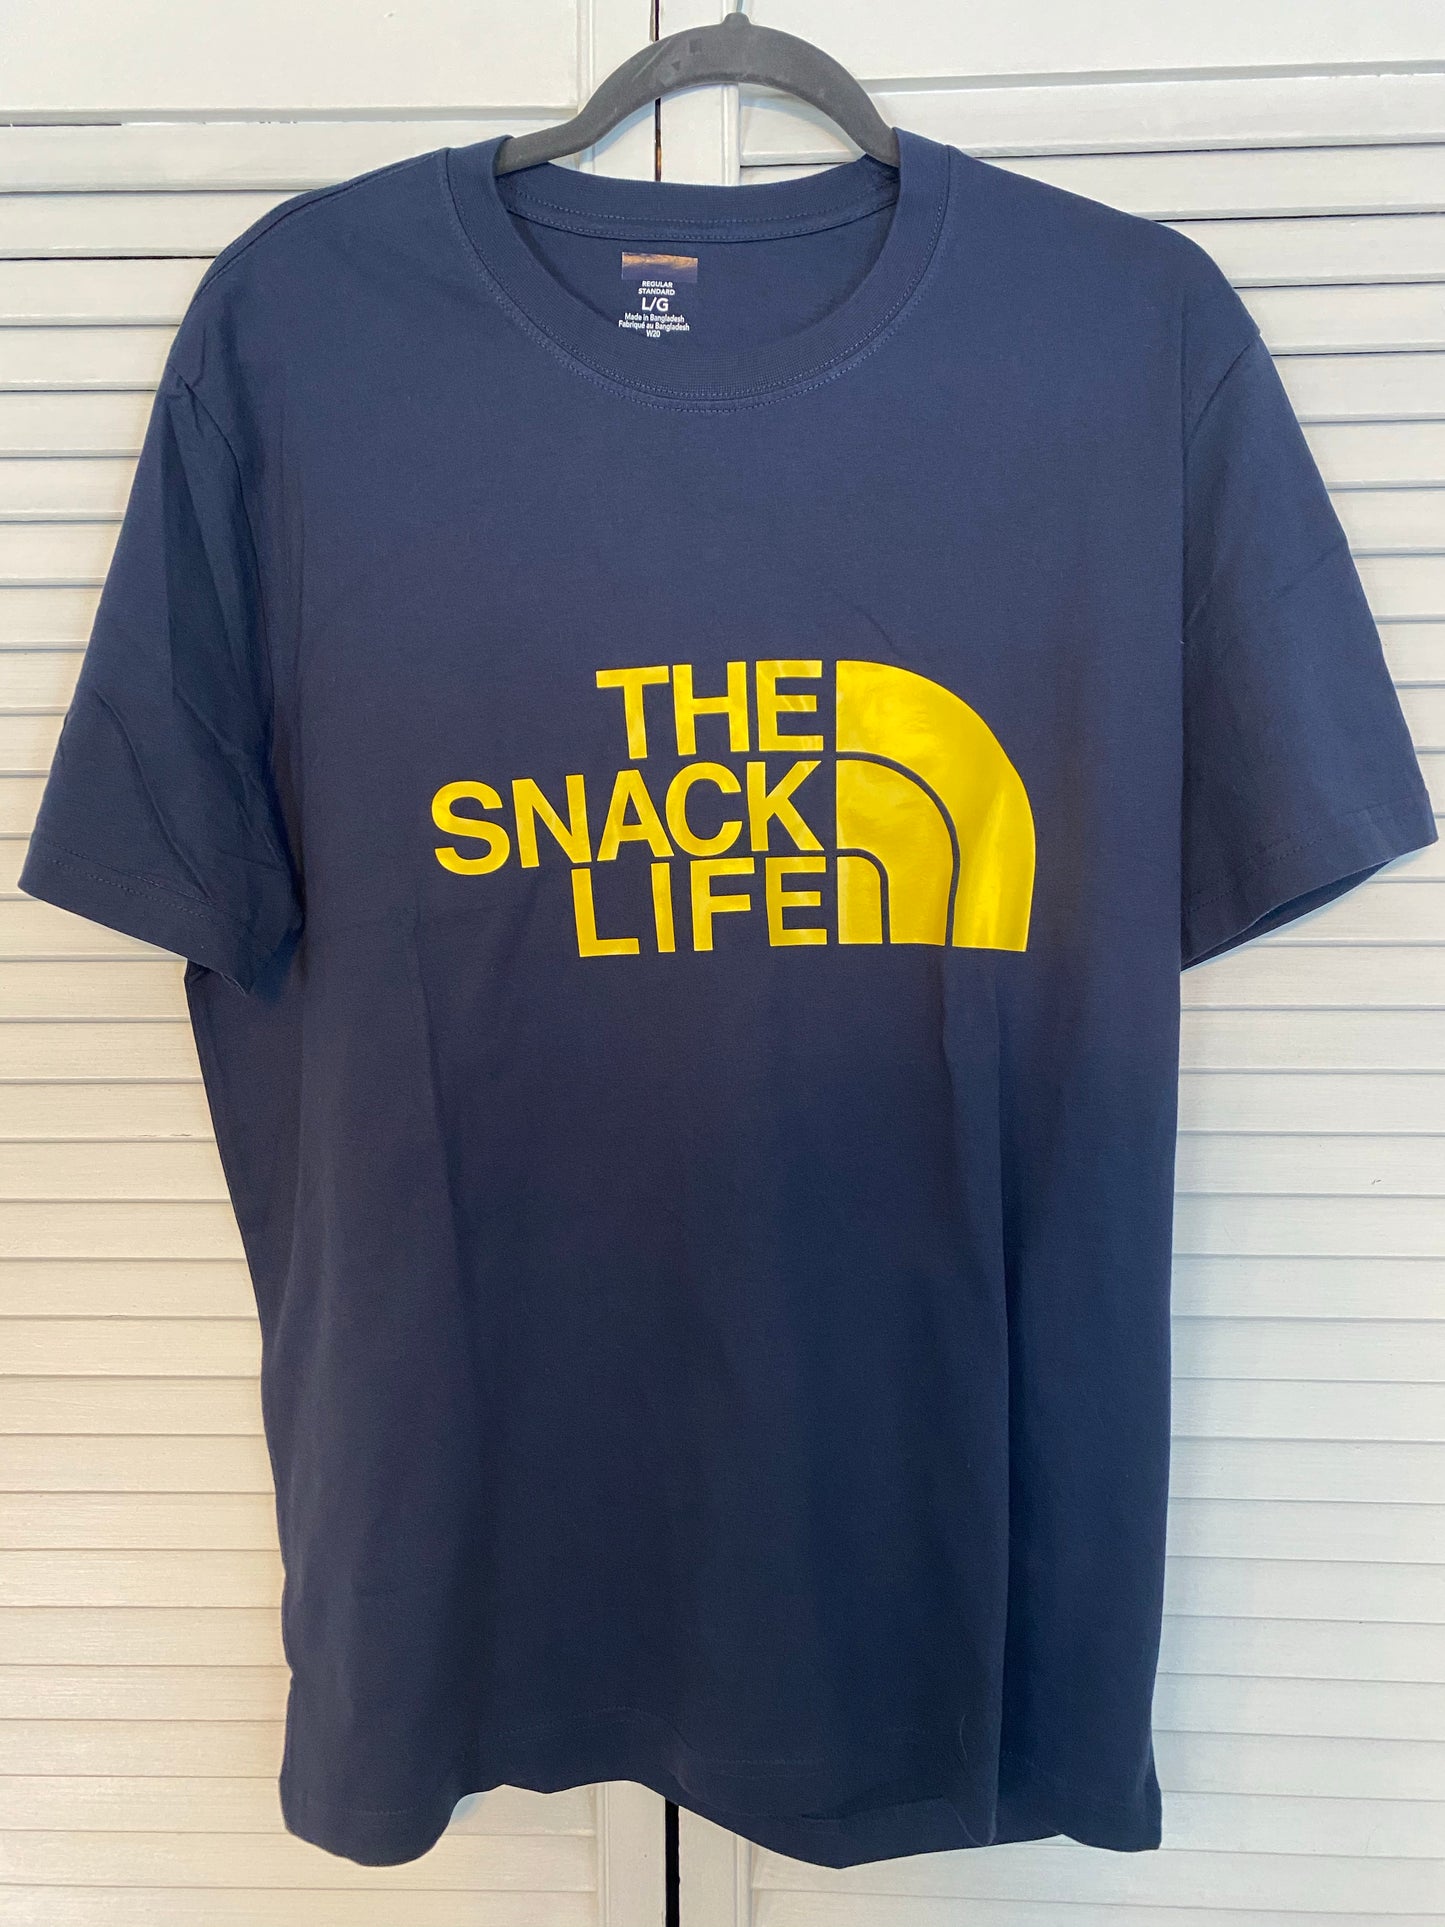 The Snack Life - TNF Shirt Parody